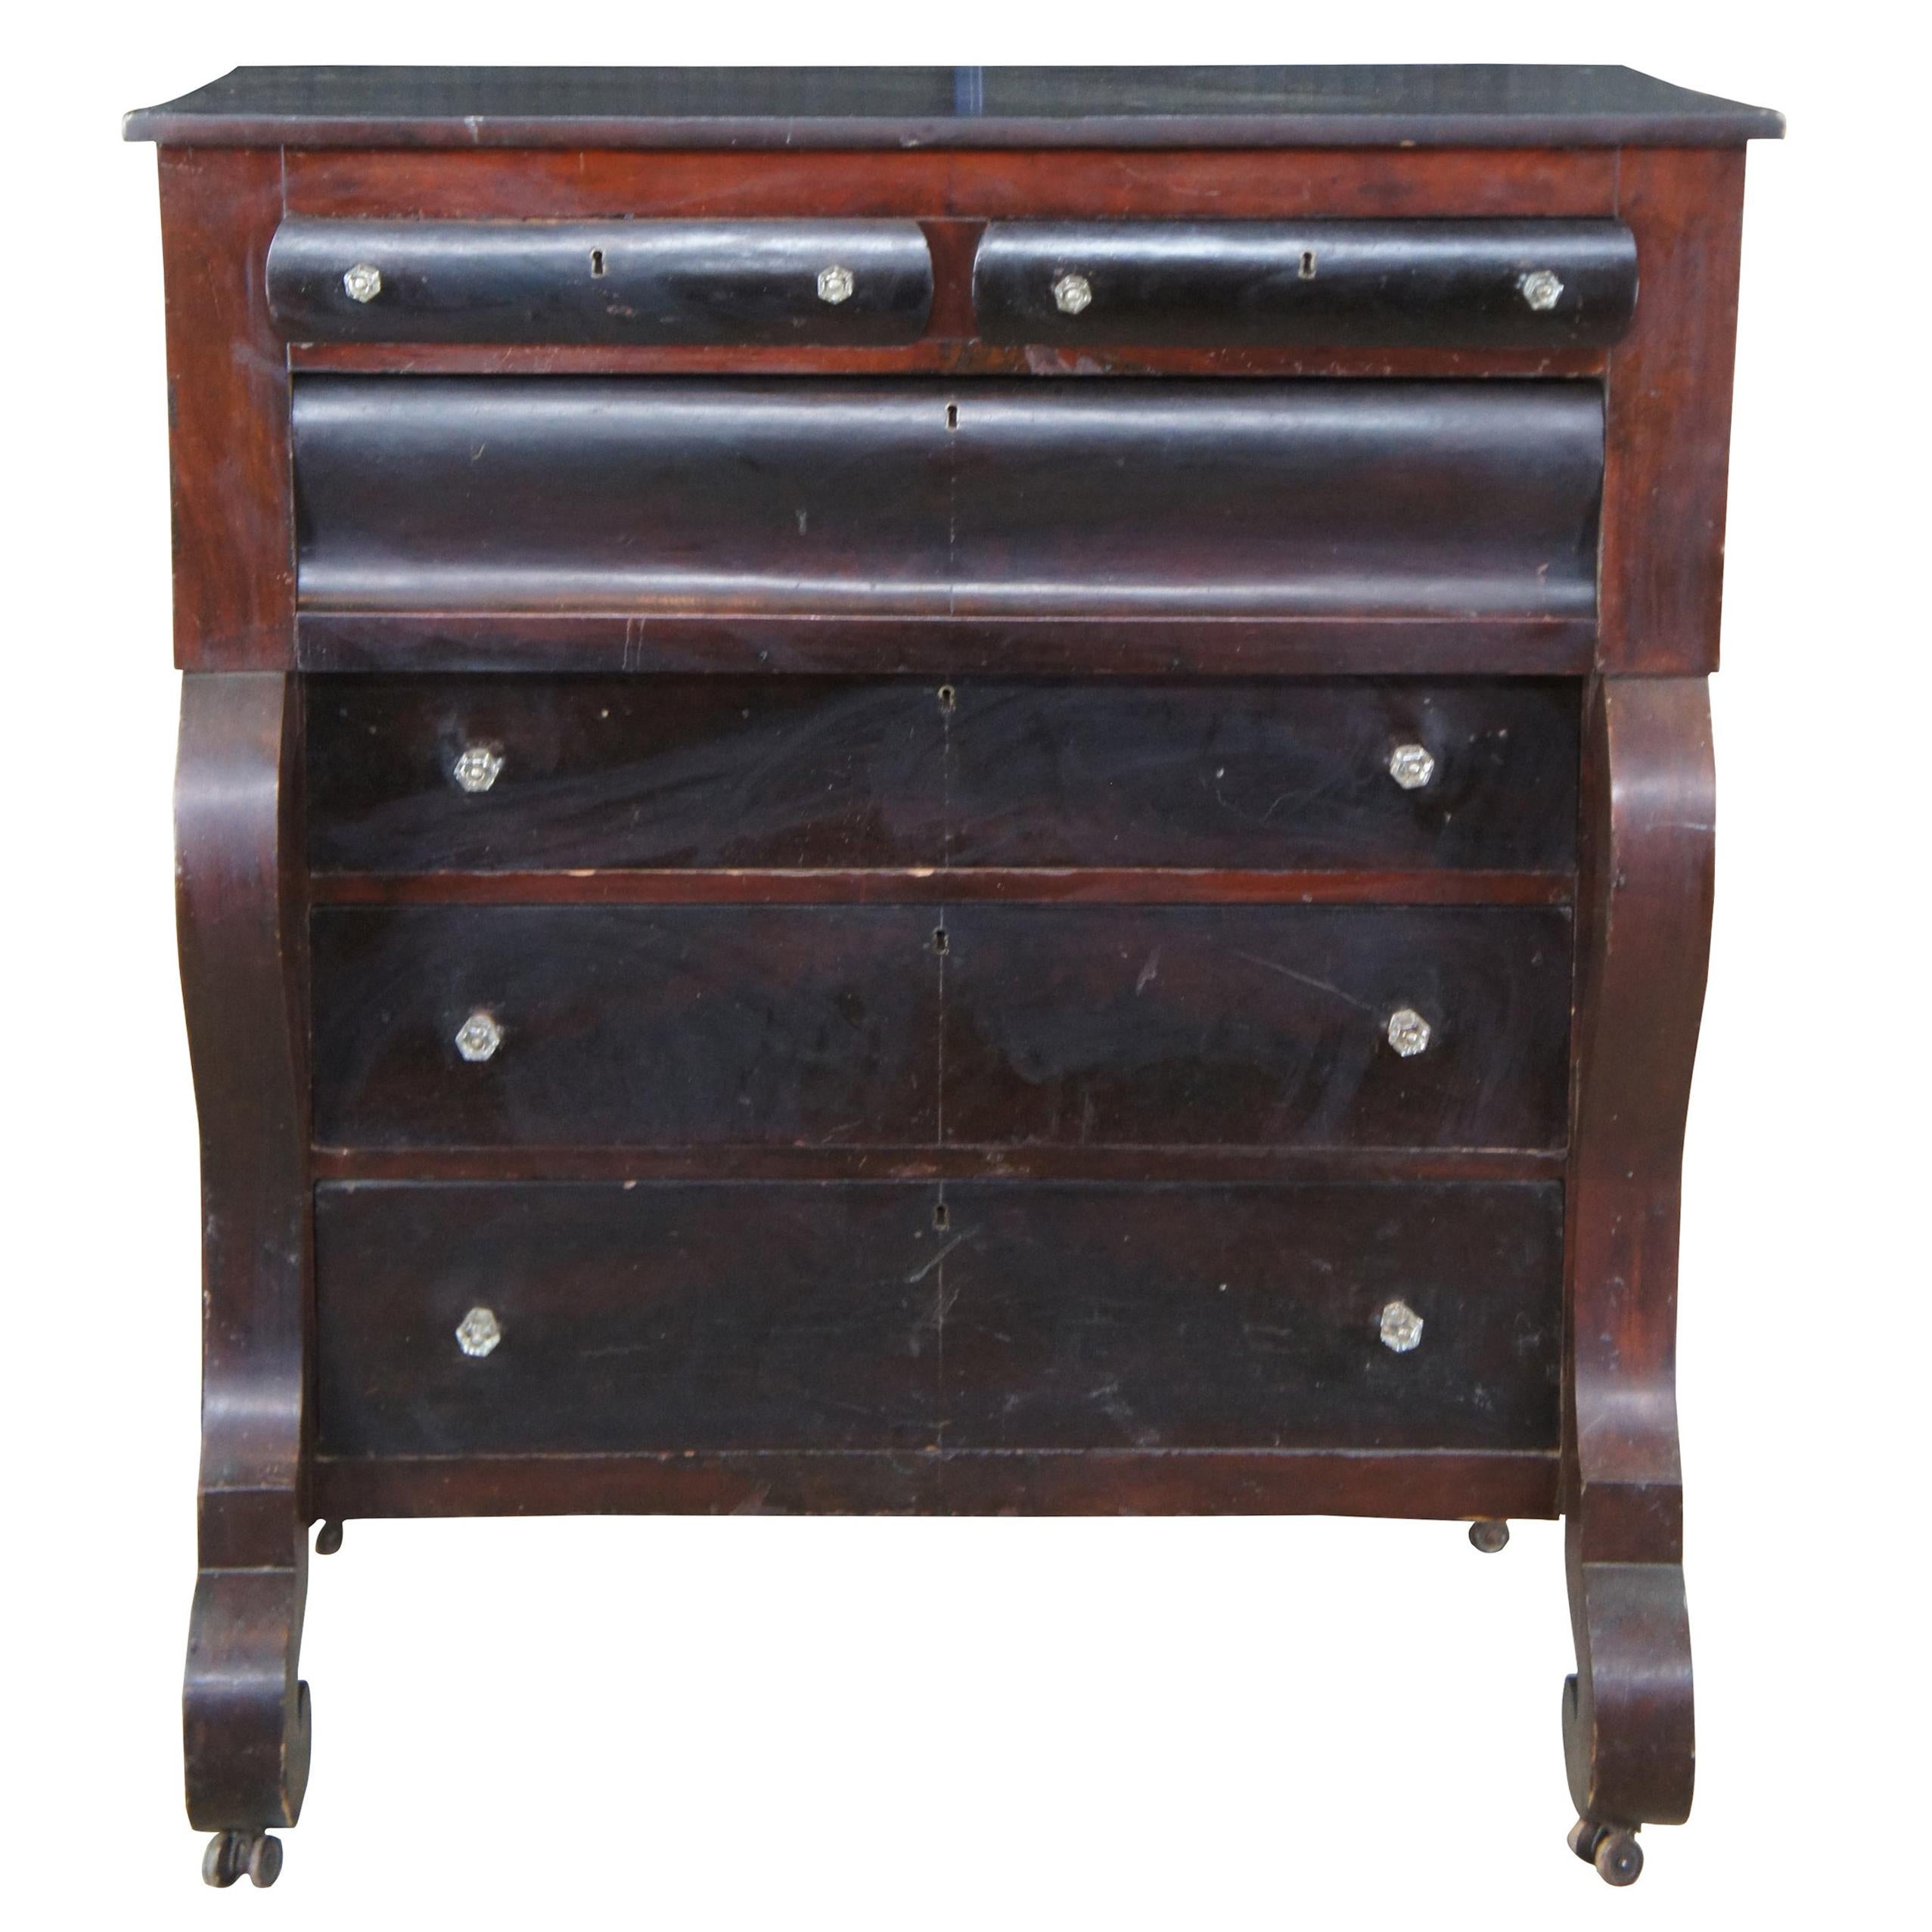 Antique 19th Century American Empire Walnut Tallboy Dresser Chest of Drawers